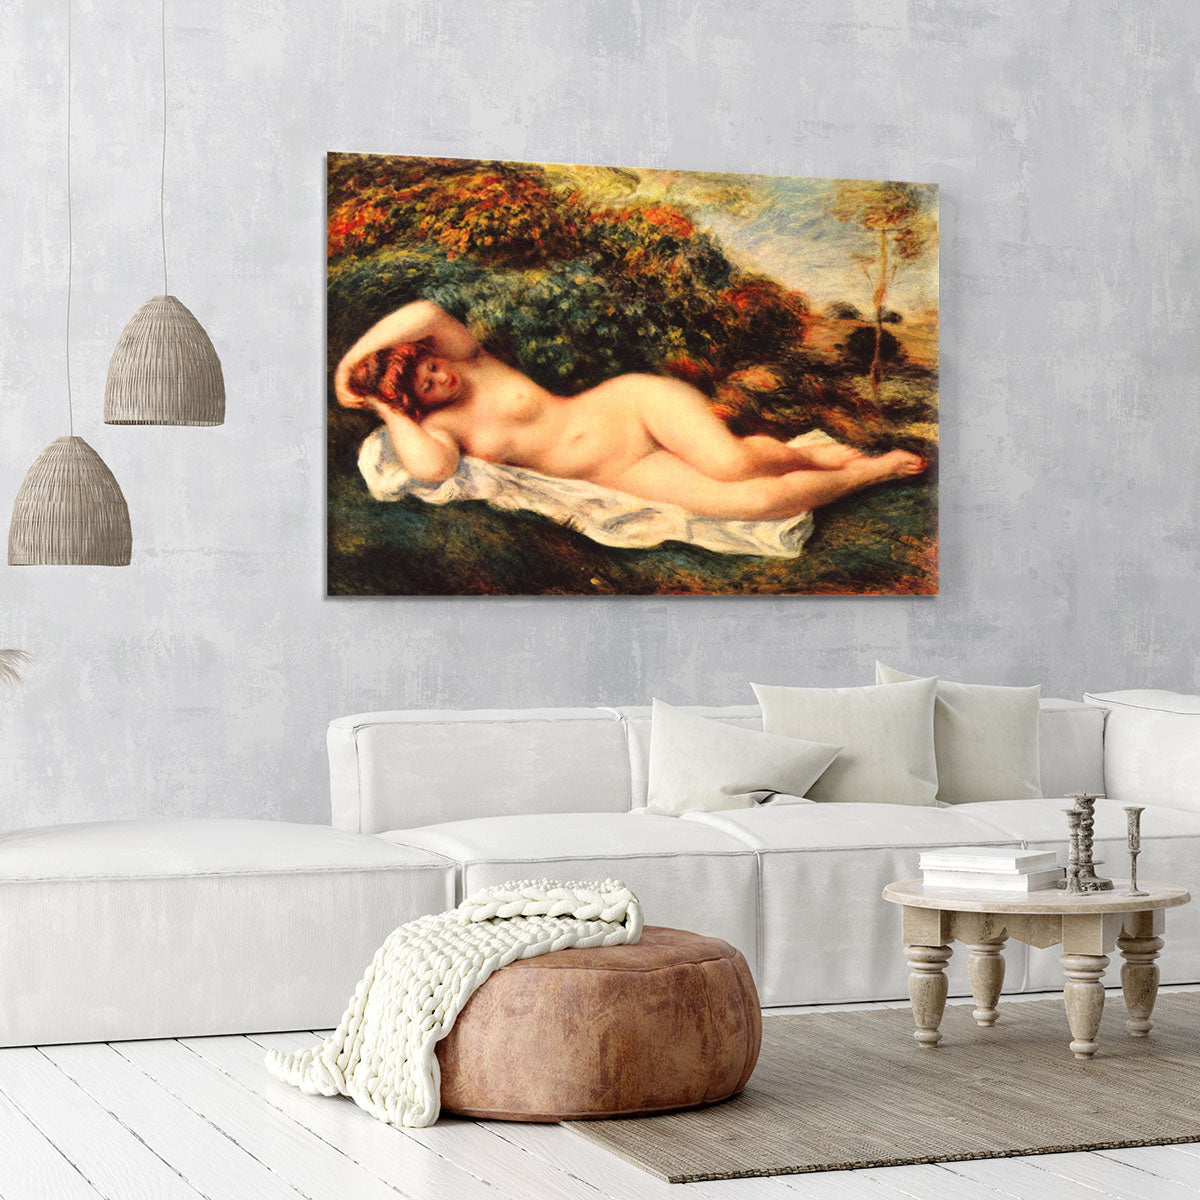 Bathing sleeping the baker by Renoir Canvas Print or Poster - Canvas Art Rocks - 6